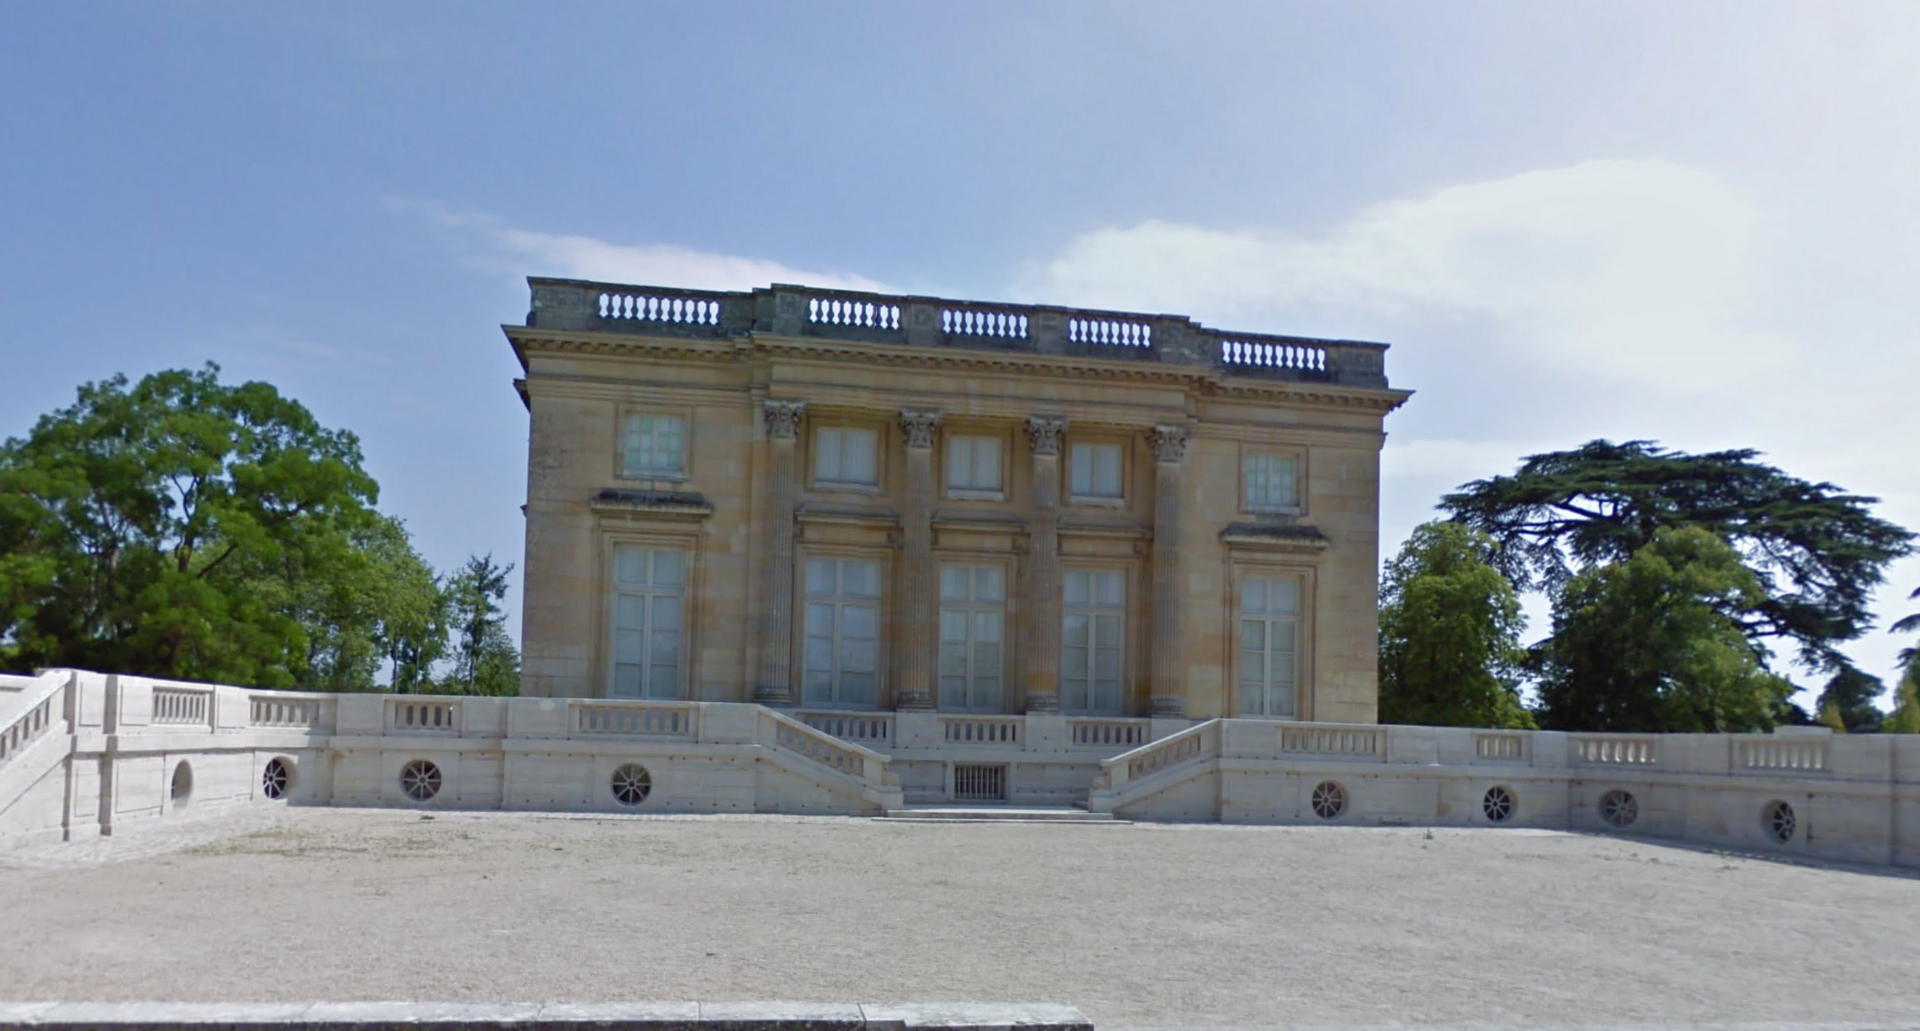 Estate of Trianon by Google Earth